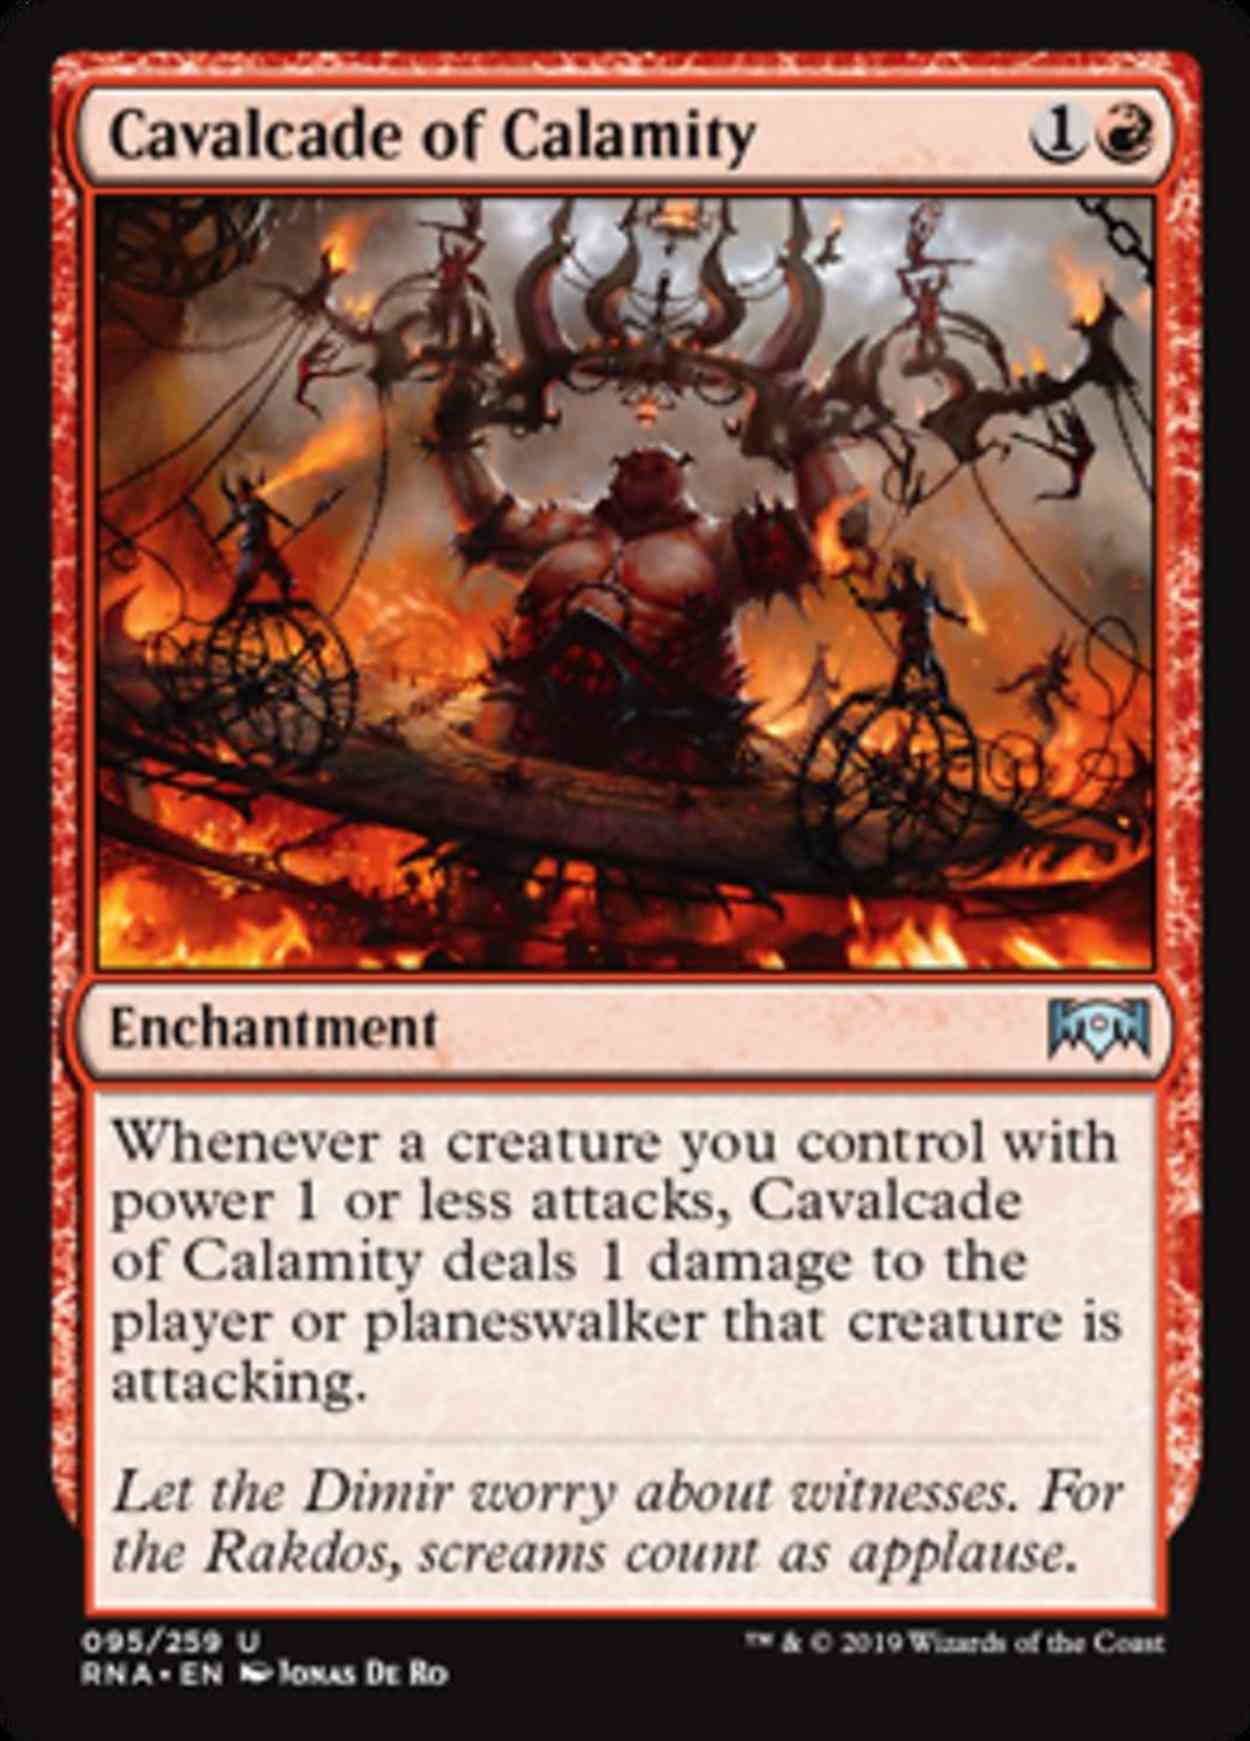 Cavalcade of Calamity magic card front